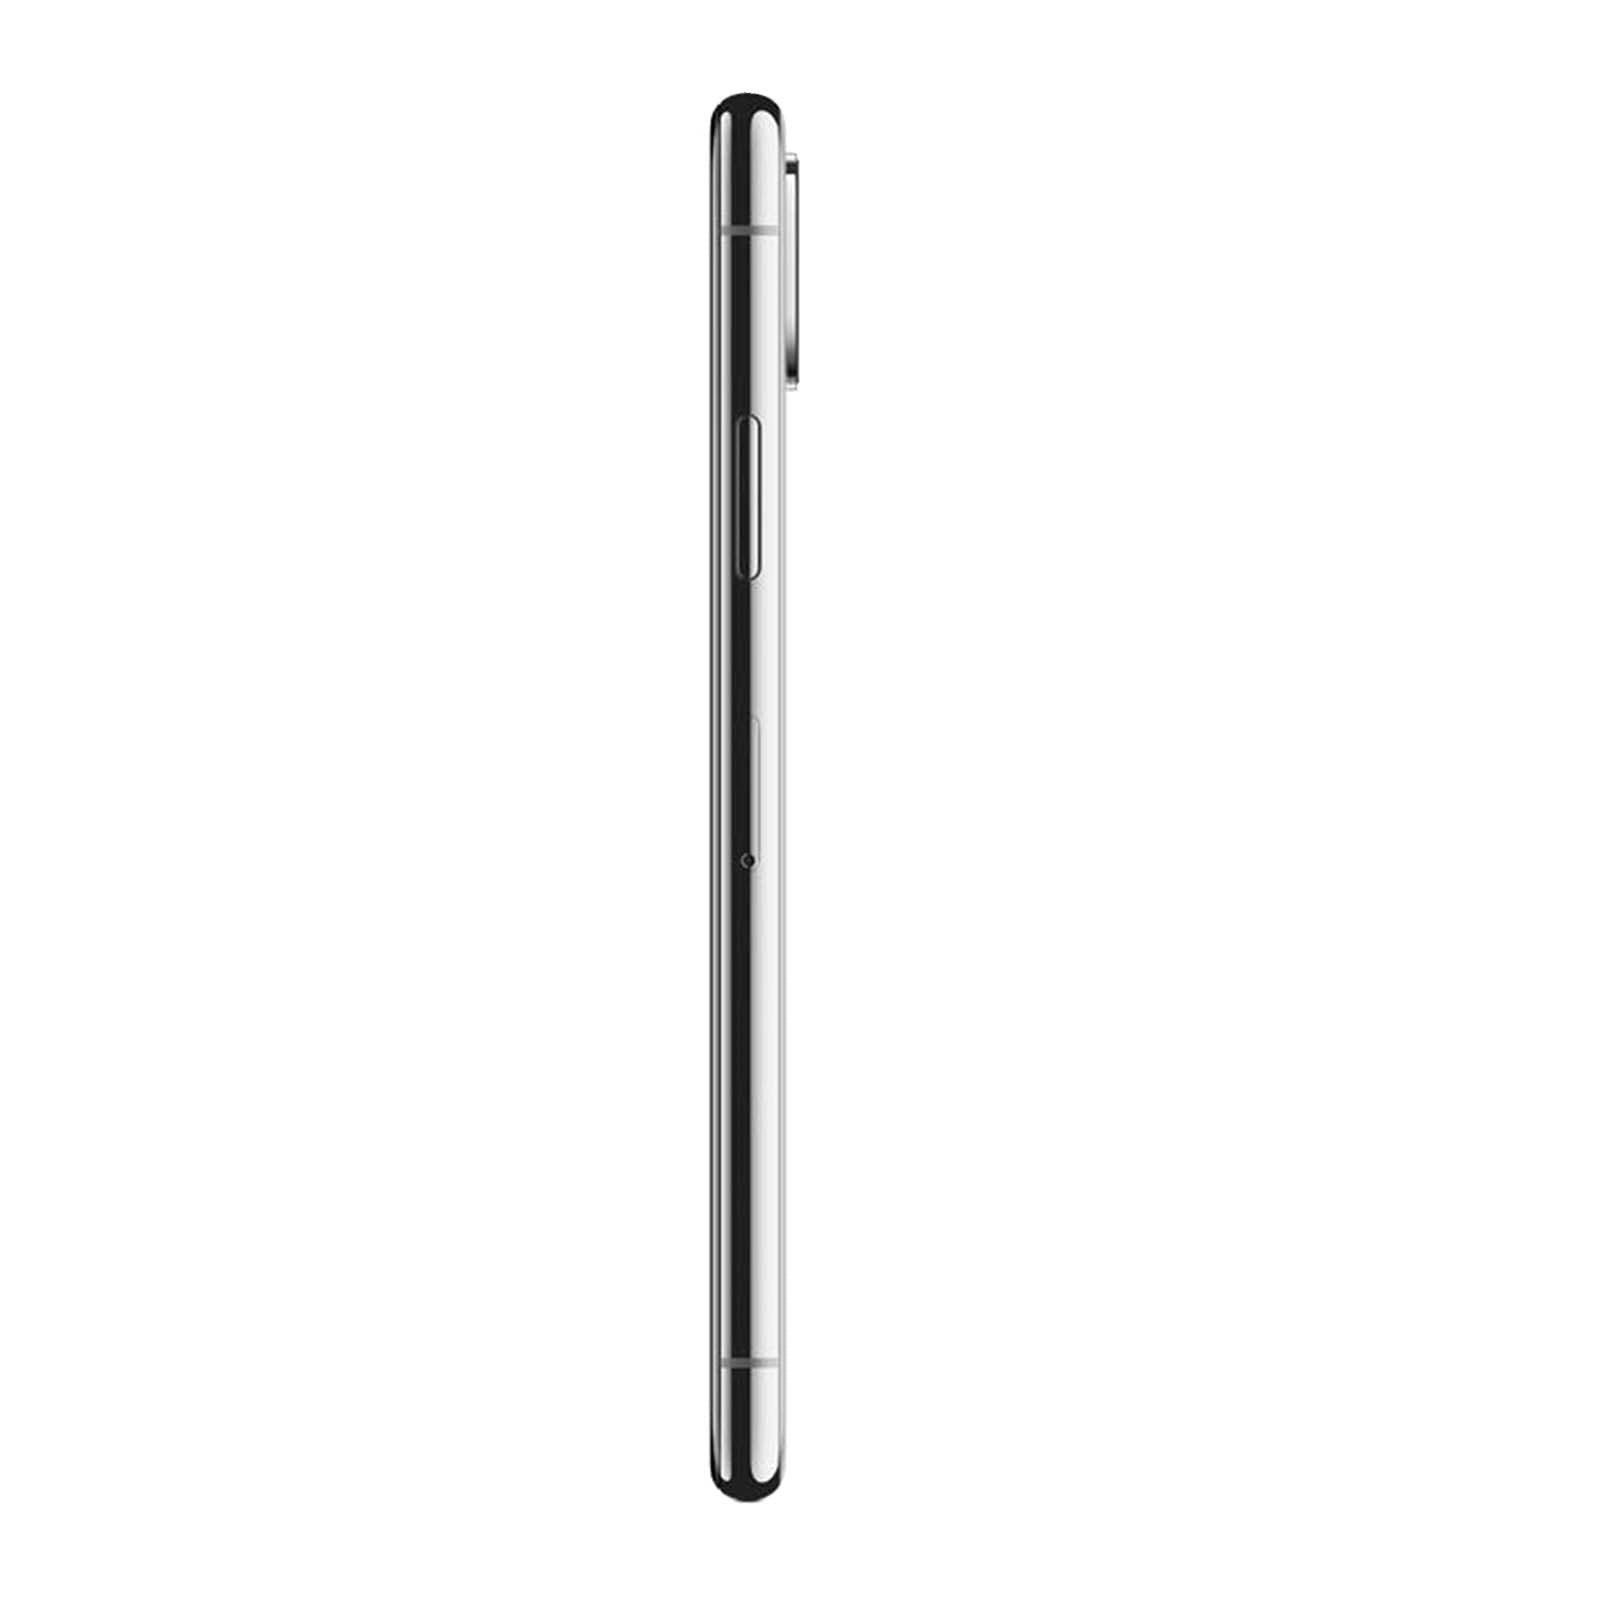 Apple iPhone XS Max 256GB Space Grey – Loop Mobile - US